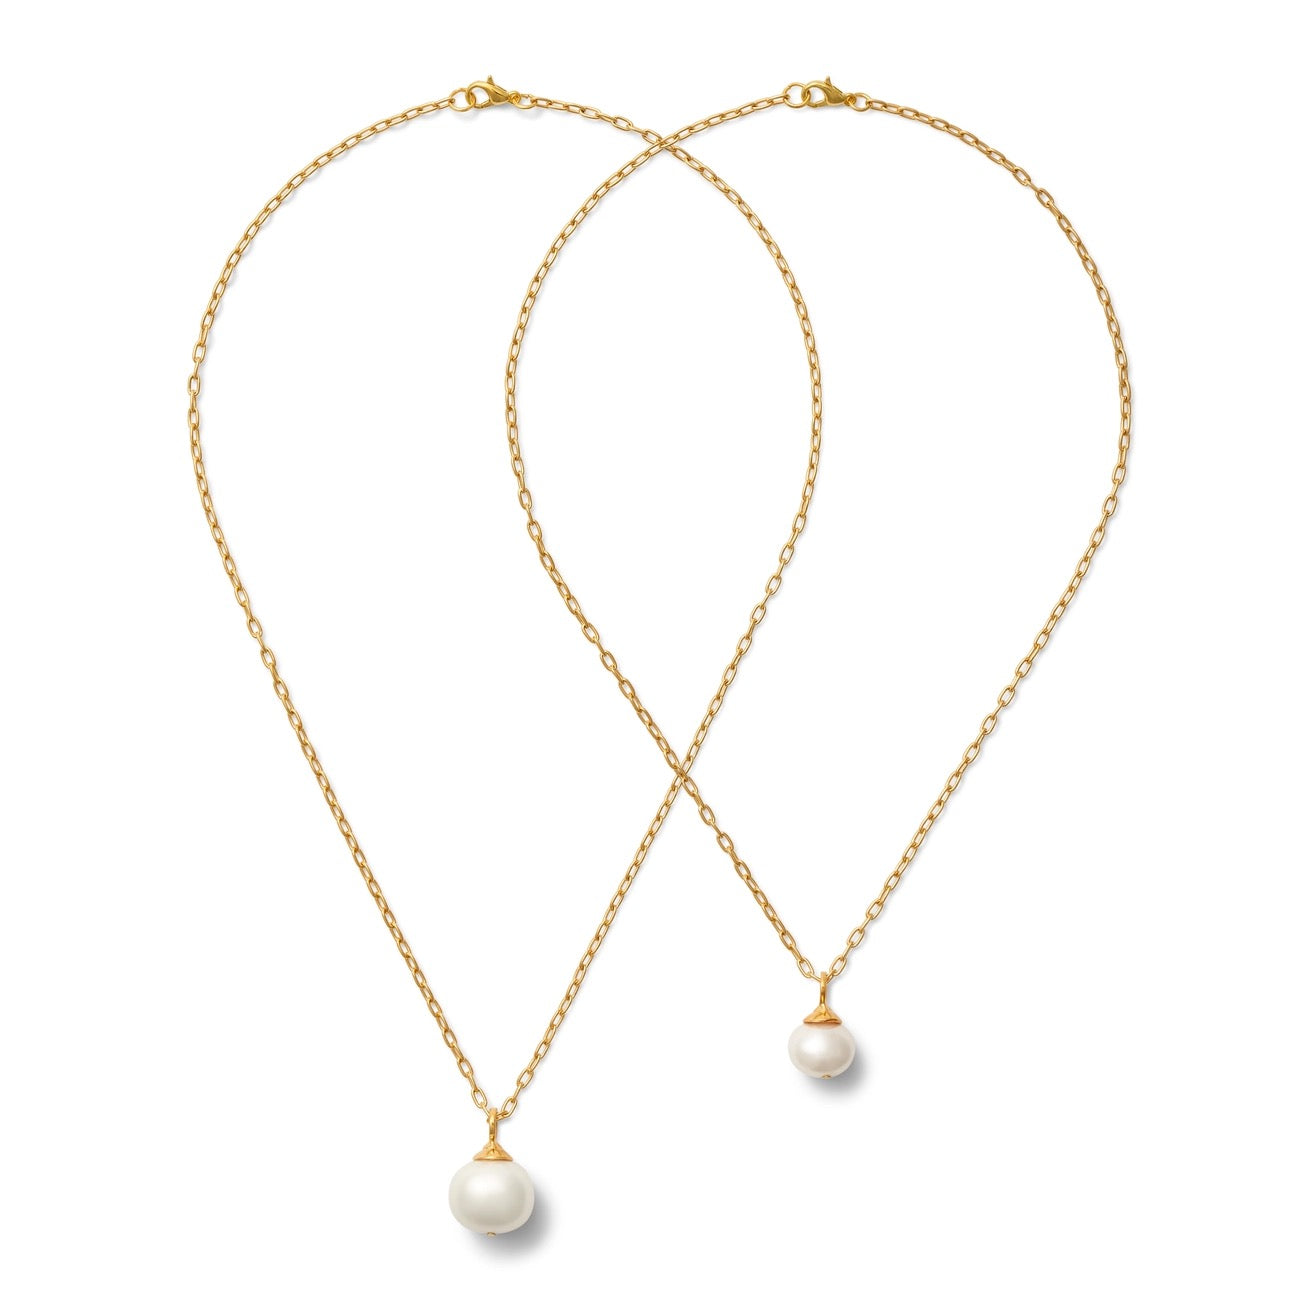 Catherine Canino Jewelry; Baby + Mama pearl pebble necklace set